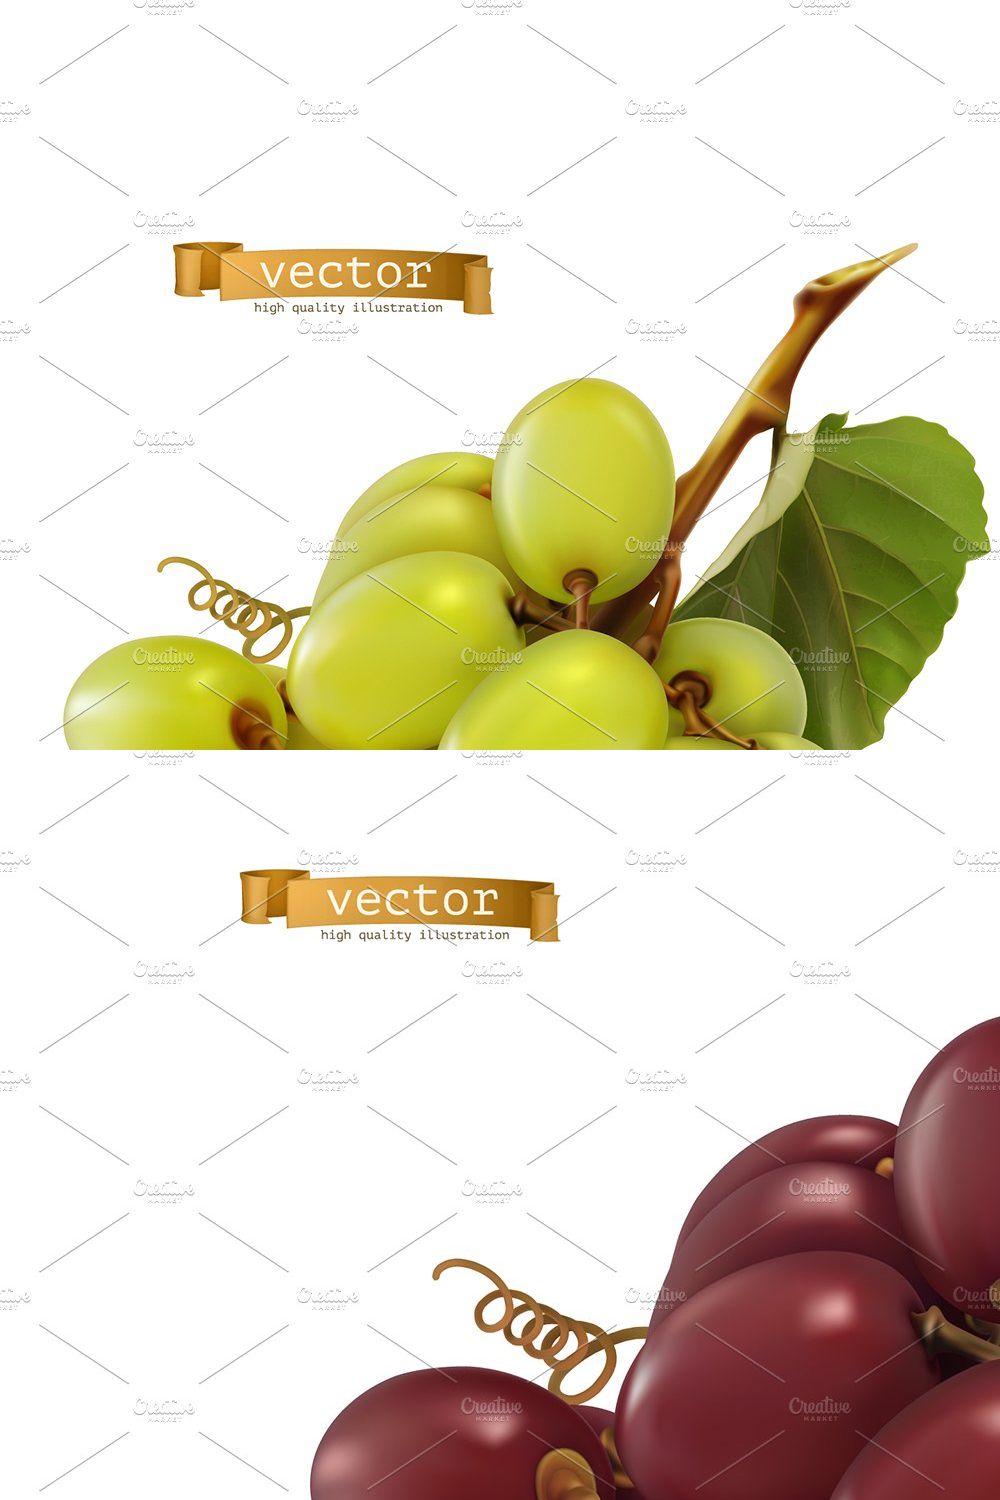 Dessert grapes for wine, vector set pinterest preview image.